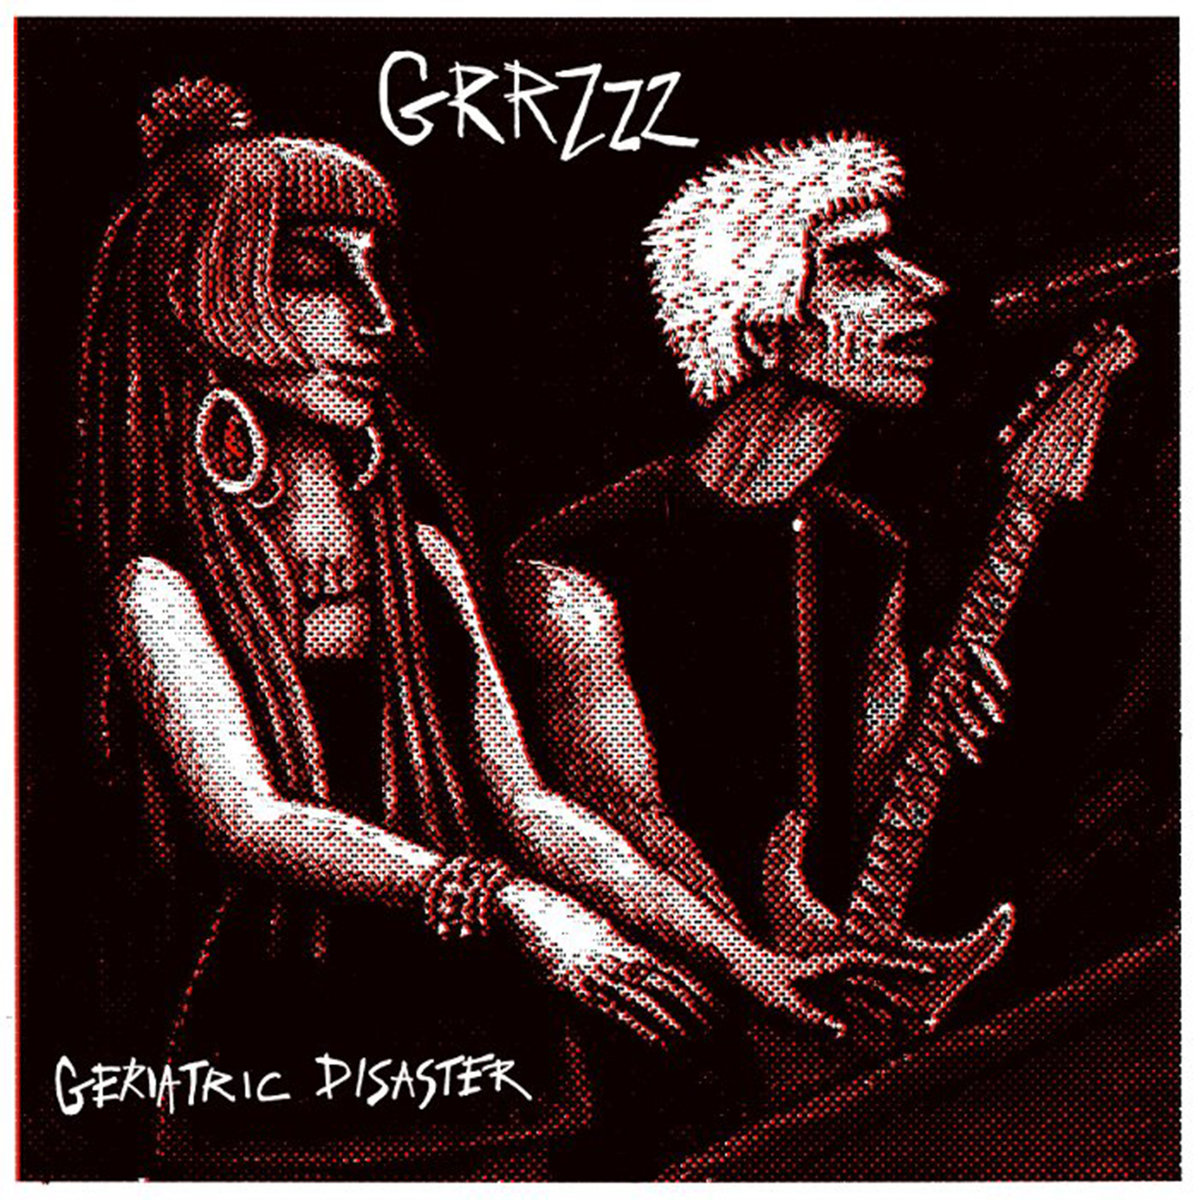 GRRZZZ "Geriatric disaster" - 33T